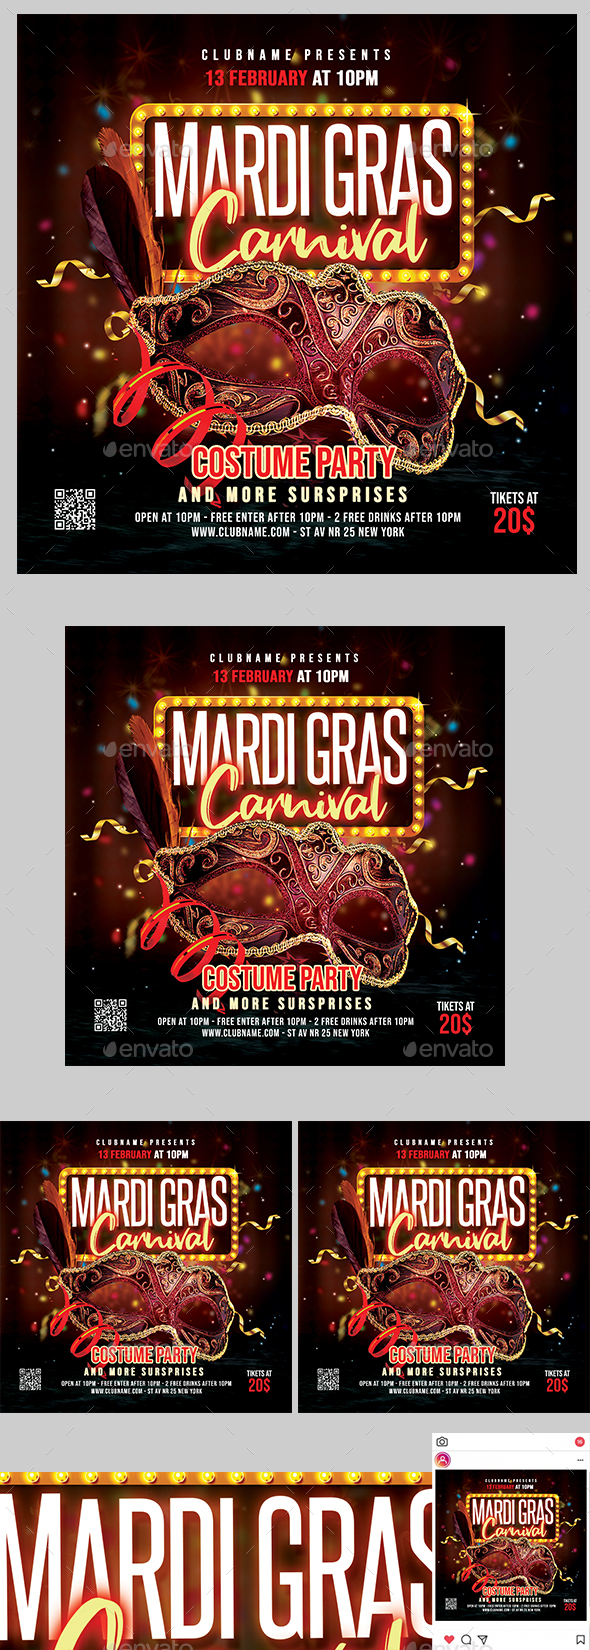 [DOWNLOAD]Mardi Gras Carnival Flyer